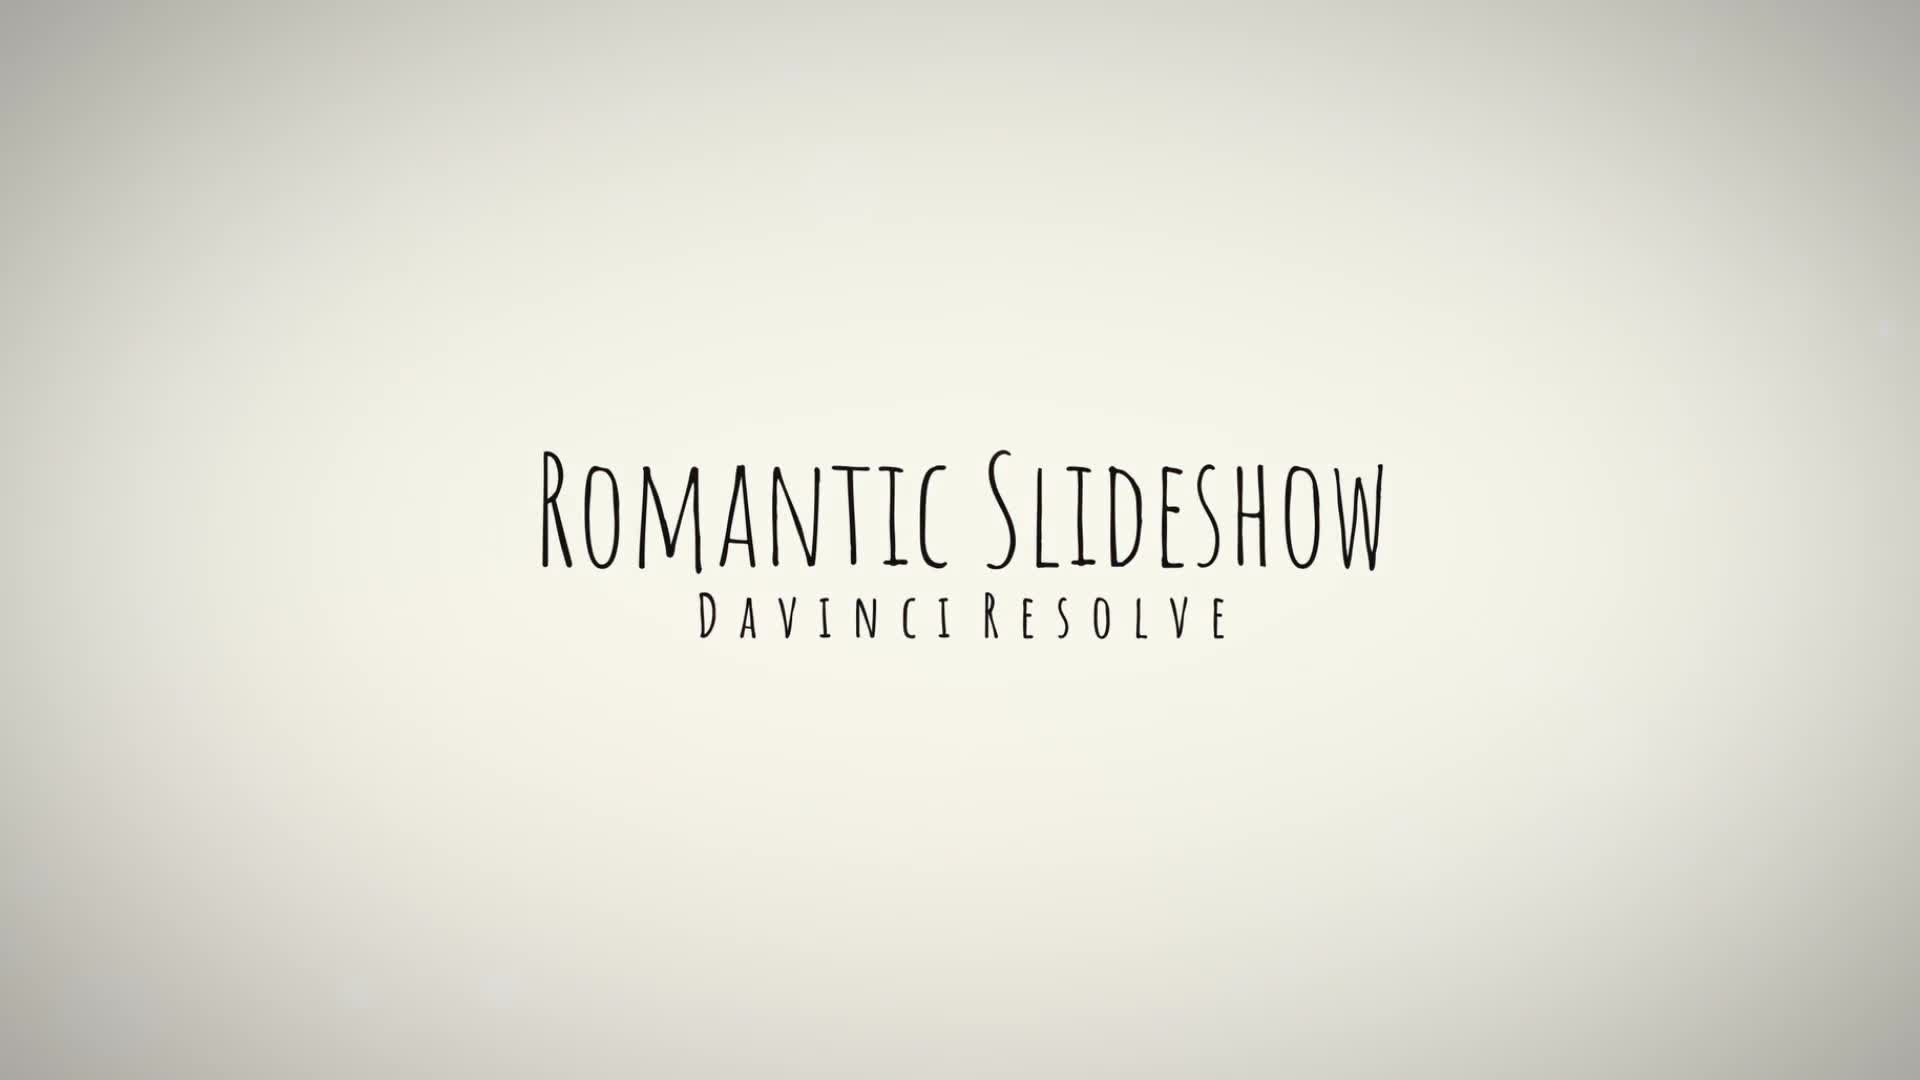 Romantic Slideshow | DR Videohive 35953007 DaVinci Resolve Image 1